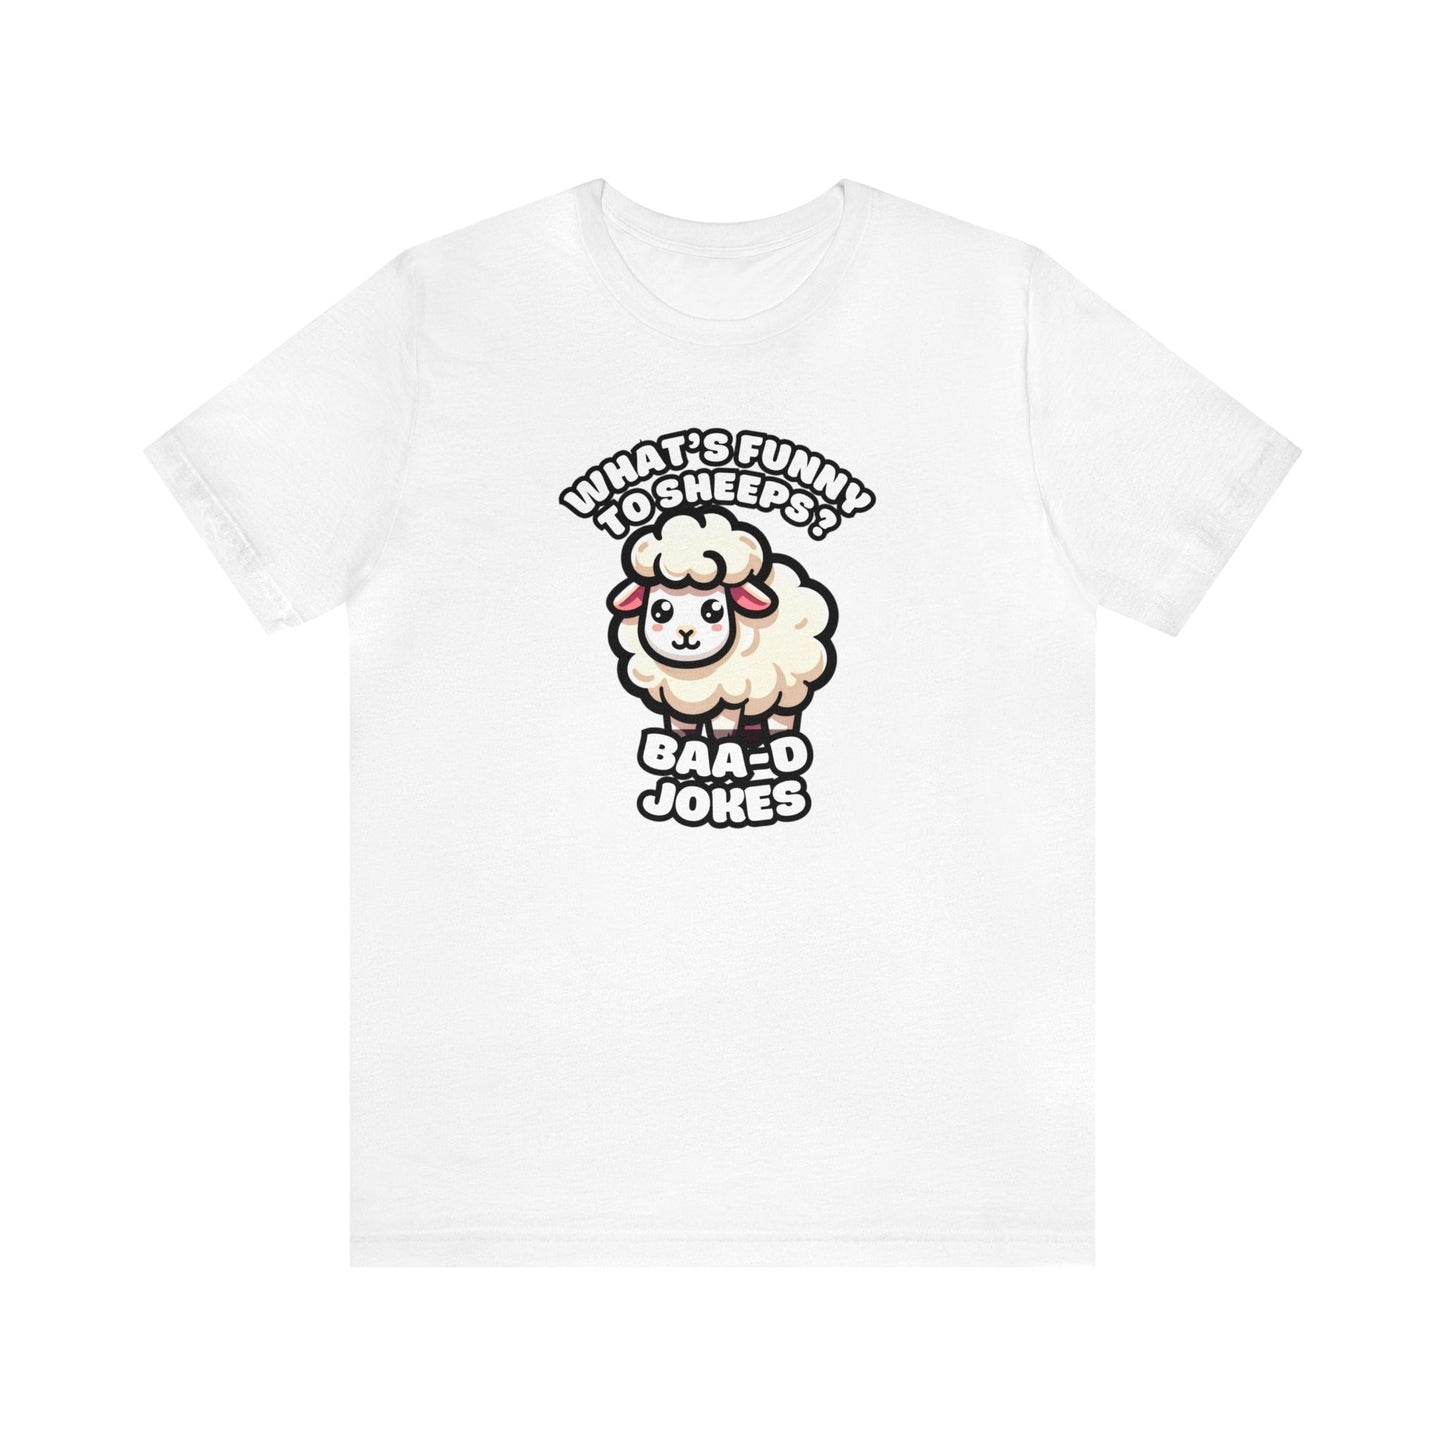 Baa-d Jokes - Sheep T-shirt White / S